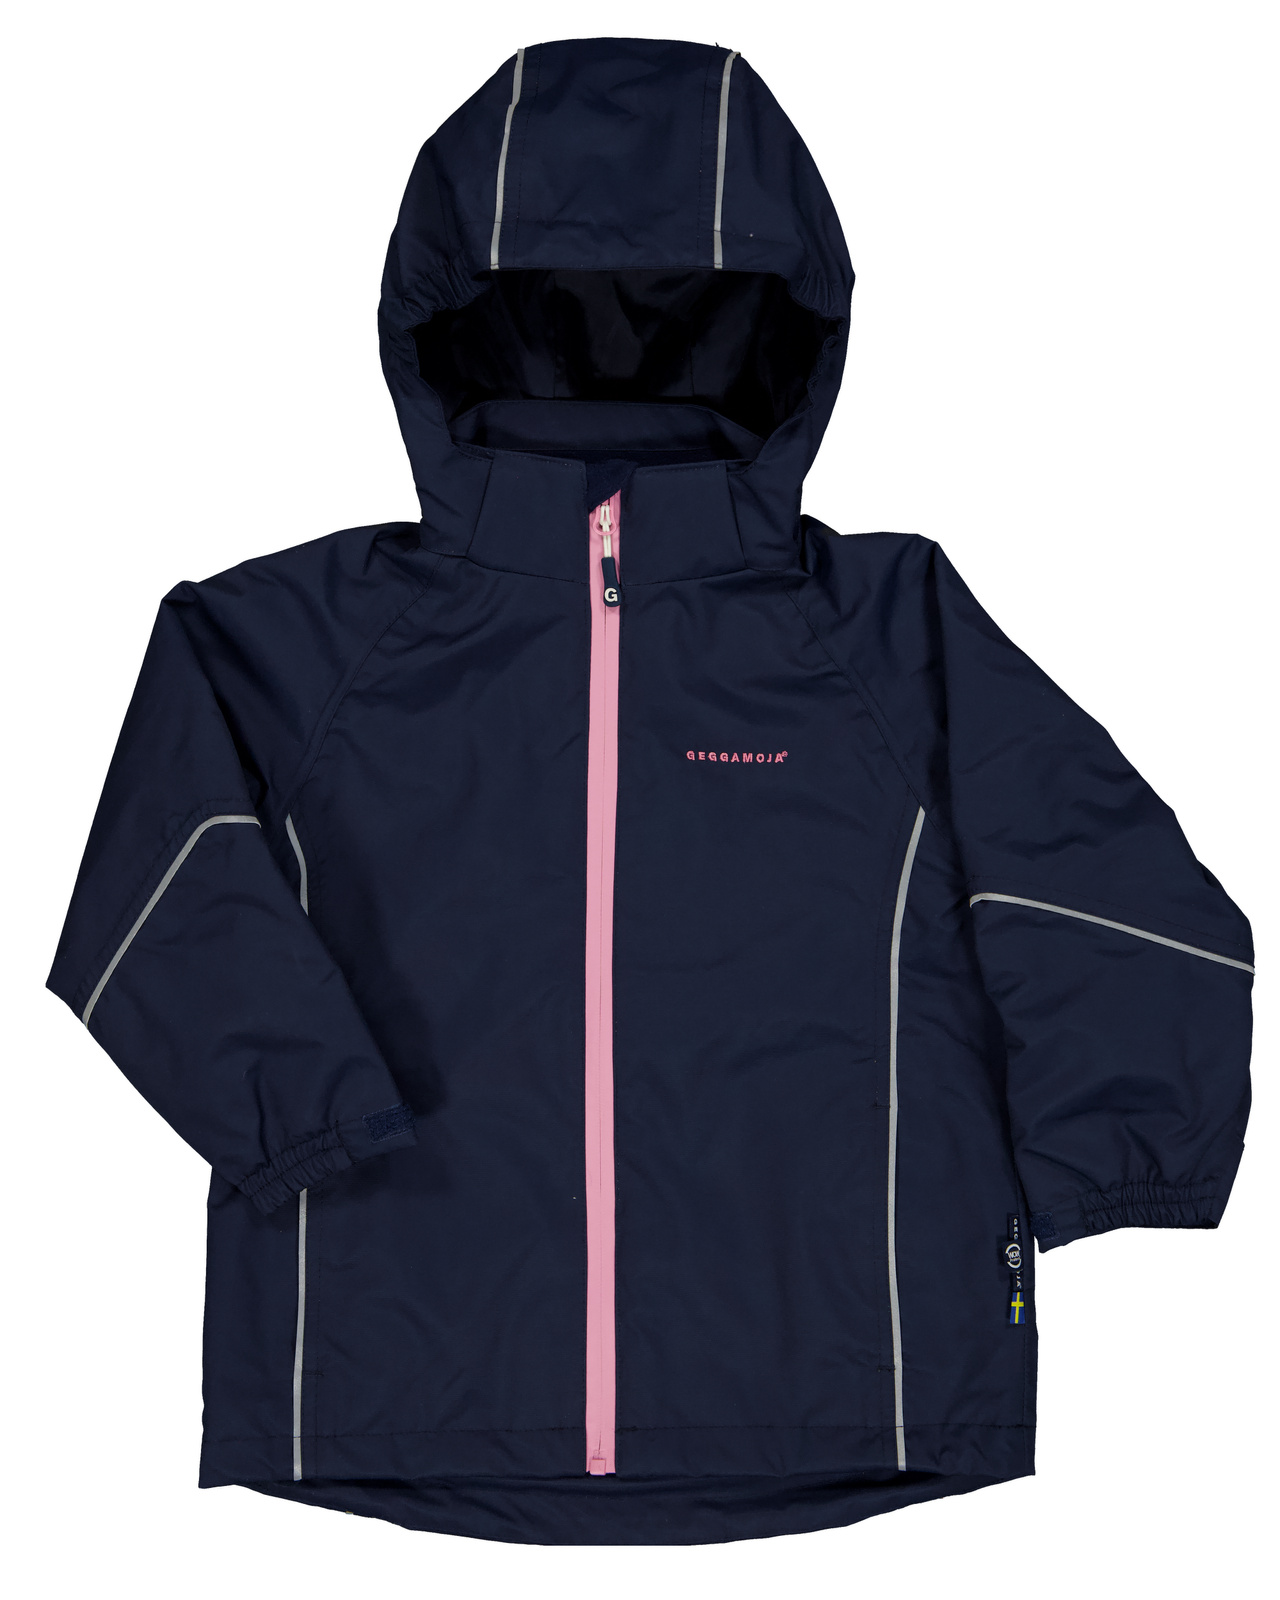 Shell jacket Navy/pink  146/152